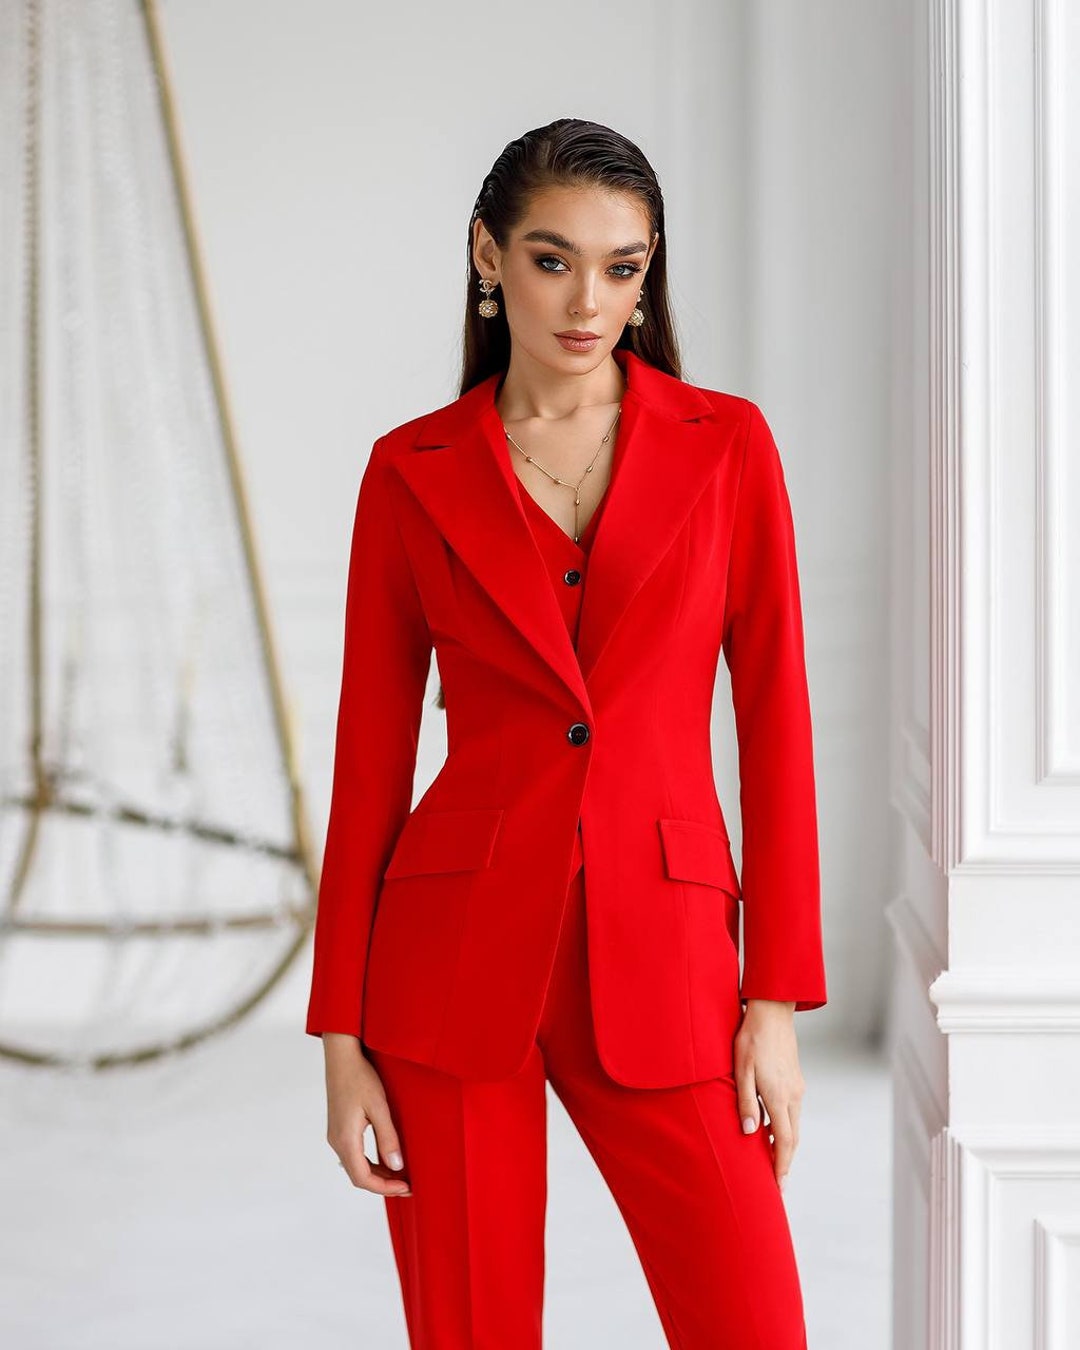 Red Pantsuit Womens, Formal Pants Suit for Business Women, Office Wear ...